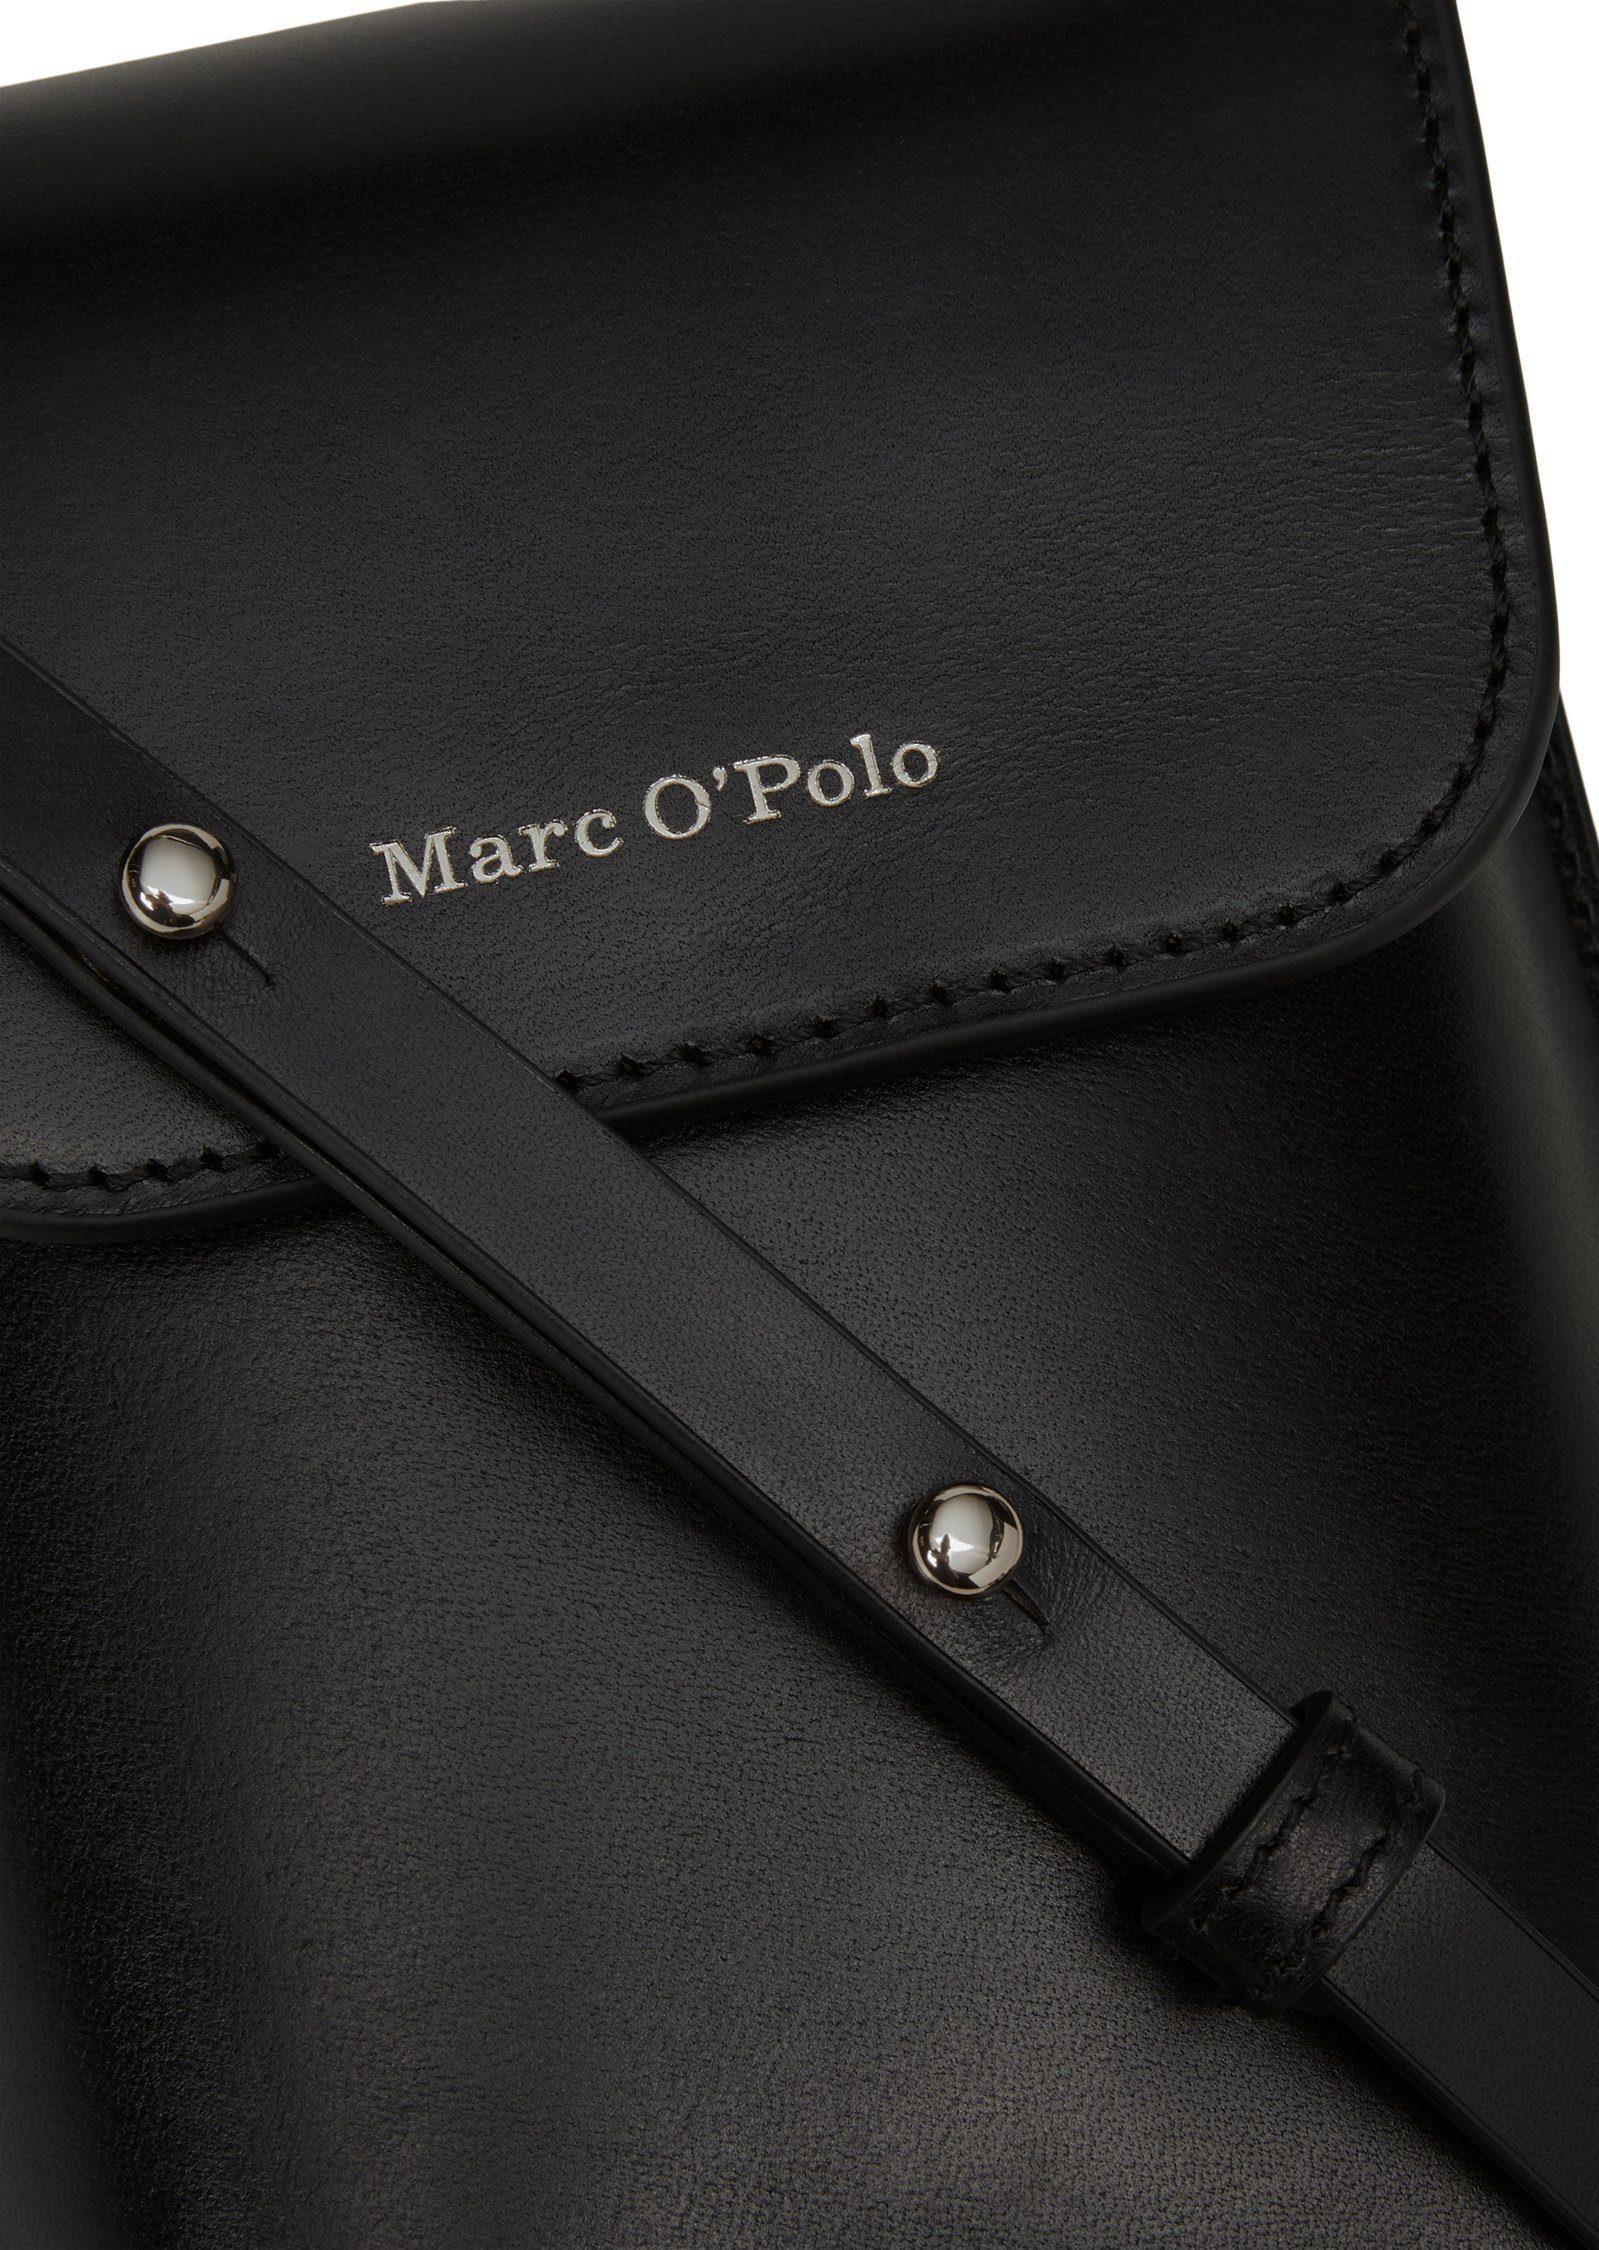 Marc O'Polo Handytasche schwarz edlem aus Rindleder